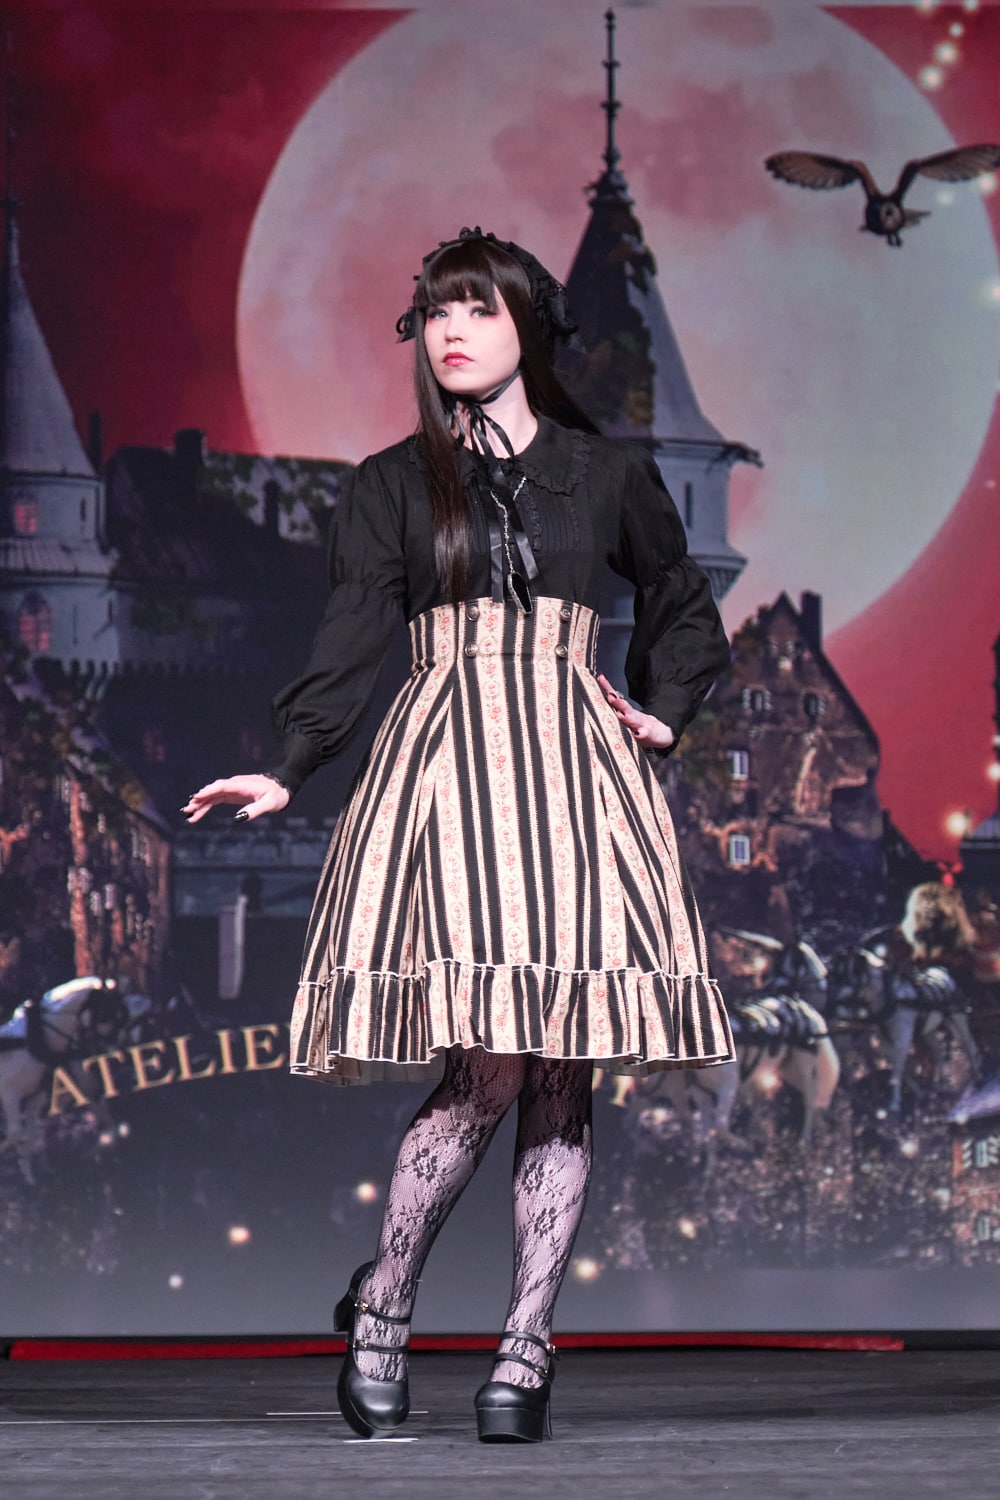 Atelier Pierrot classic lolita model wearing black long sleeve cutsew and floral pattern high waist skirt - full body standing pose 1.